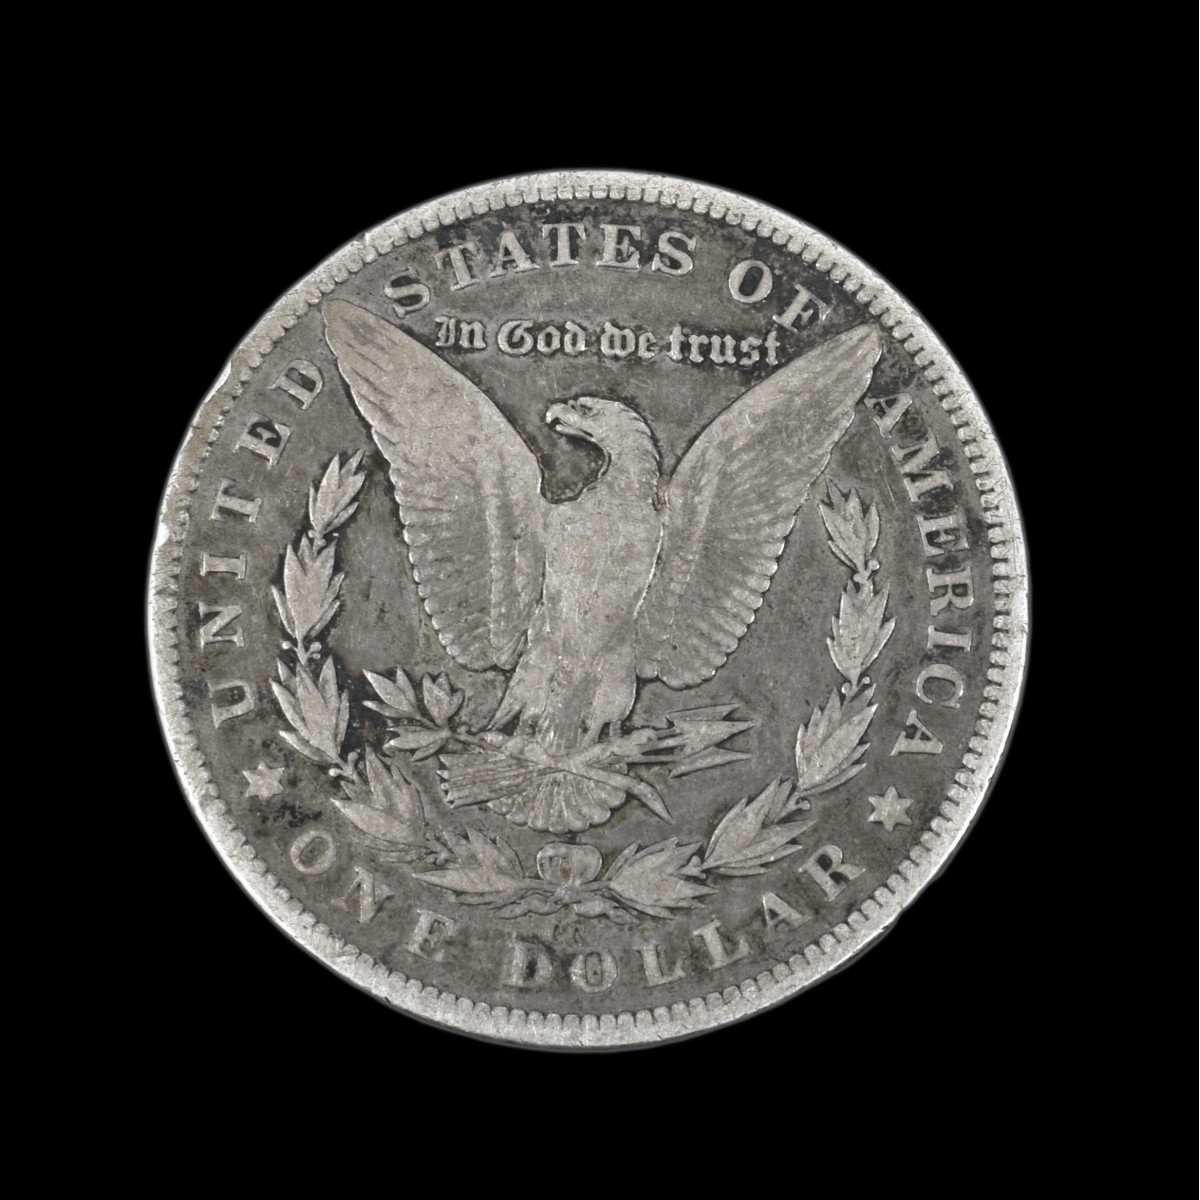 Ten U.S. Silver Morgan Dollars